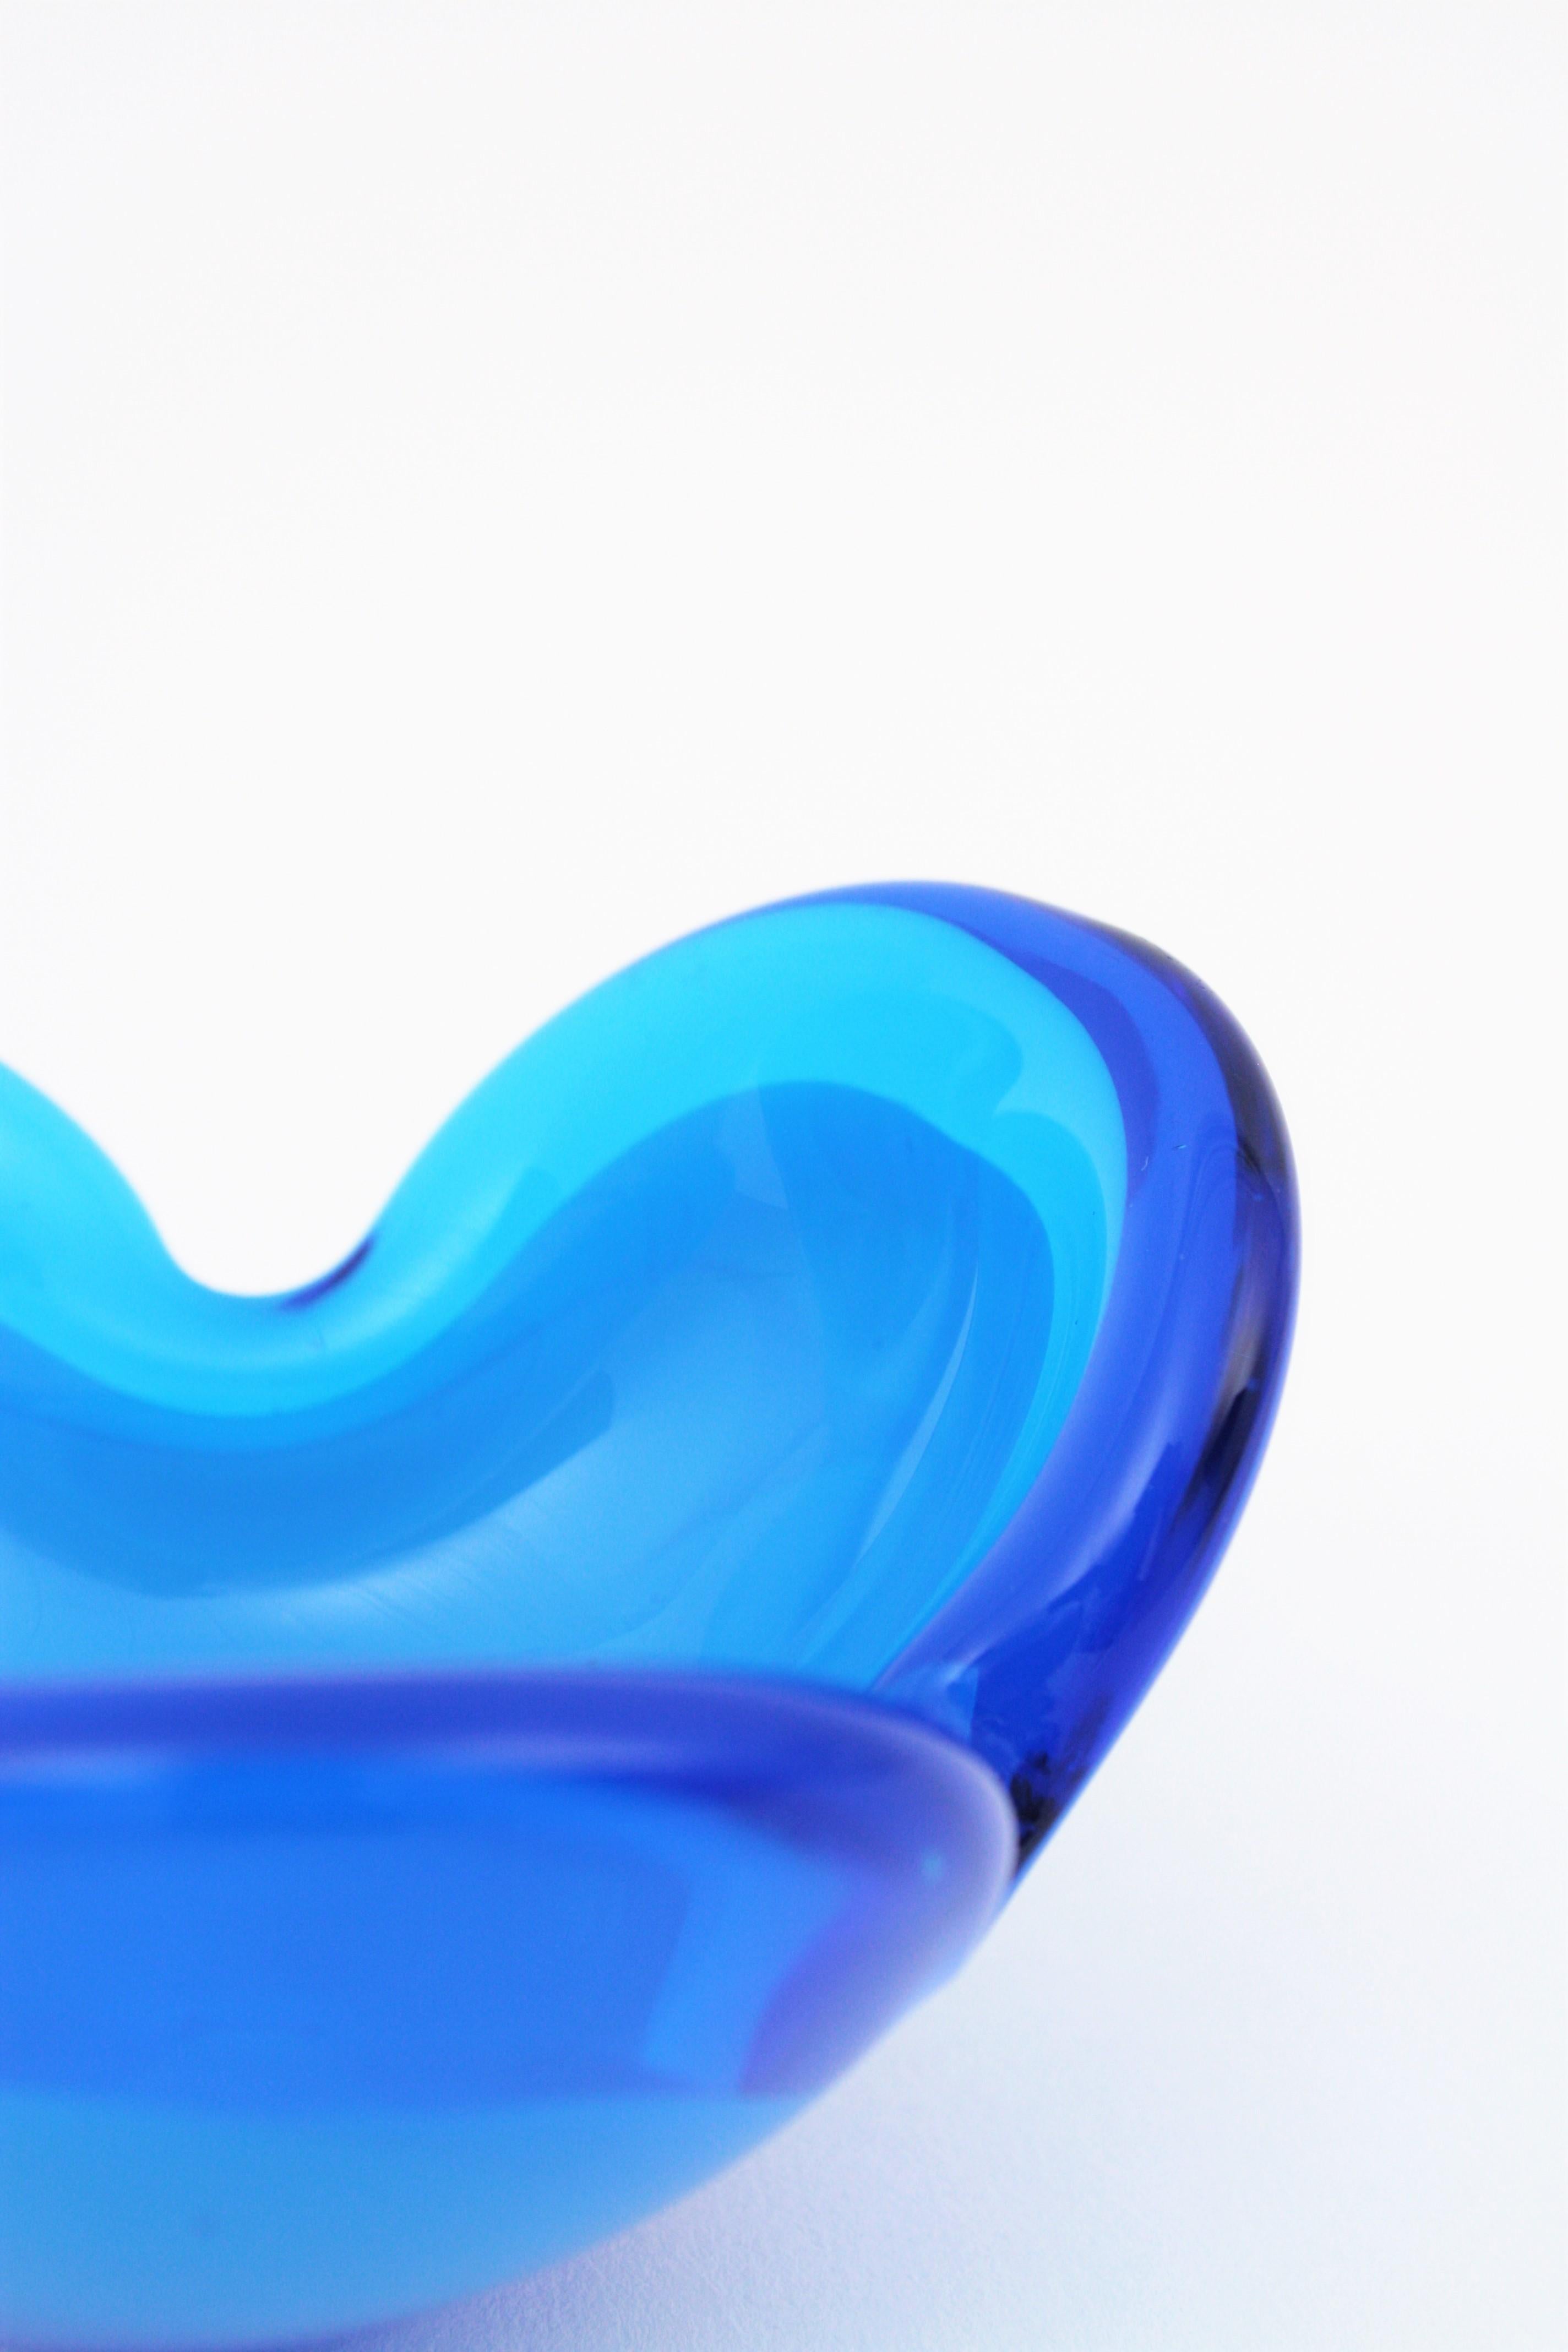 Seguso Murano Midcentury Blue Italian Art Glass Bowl For Sale 9